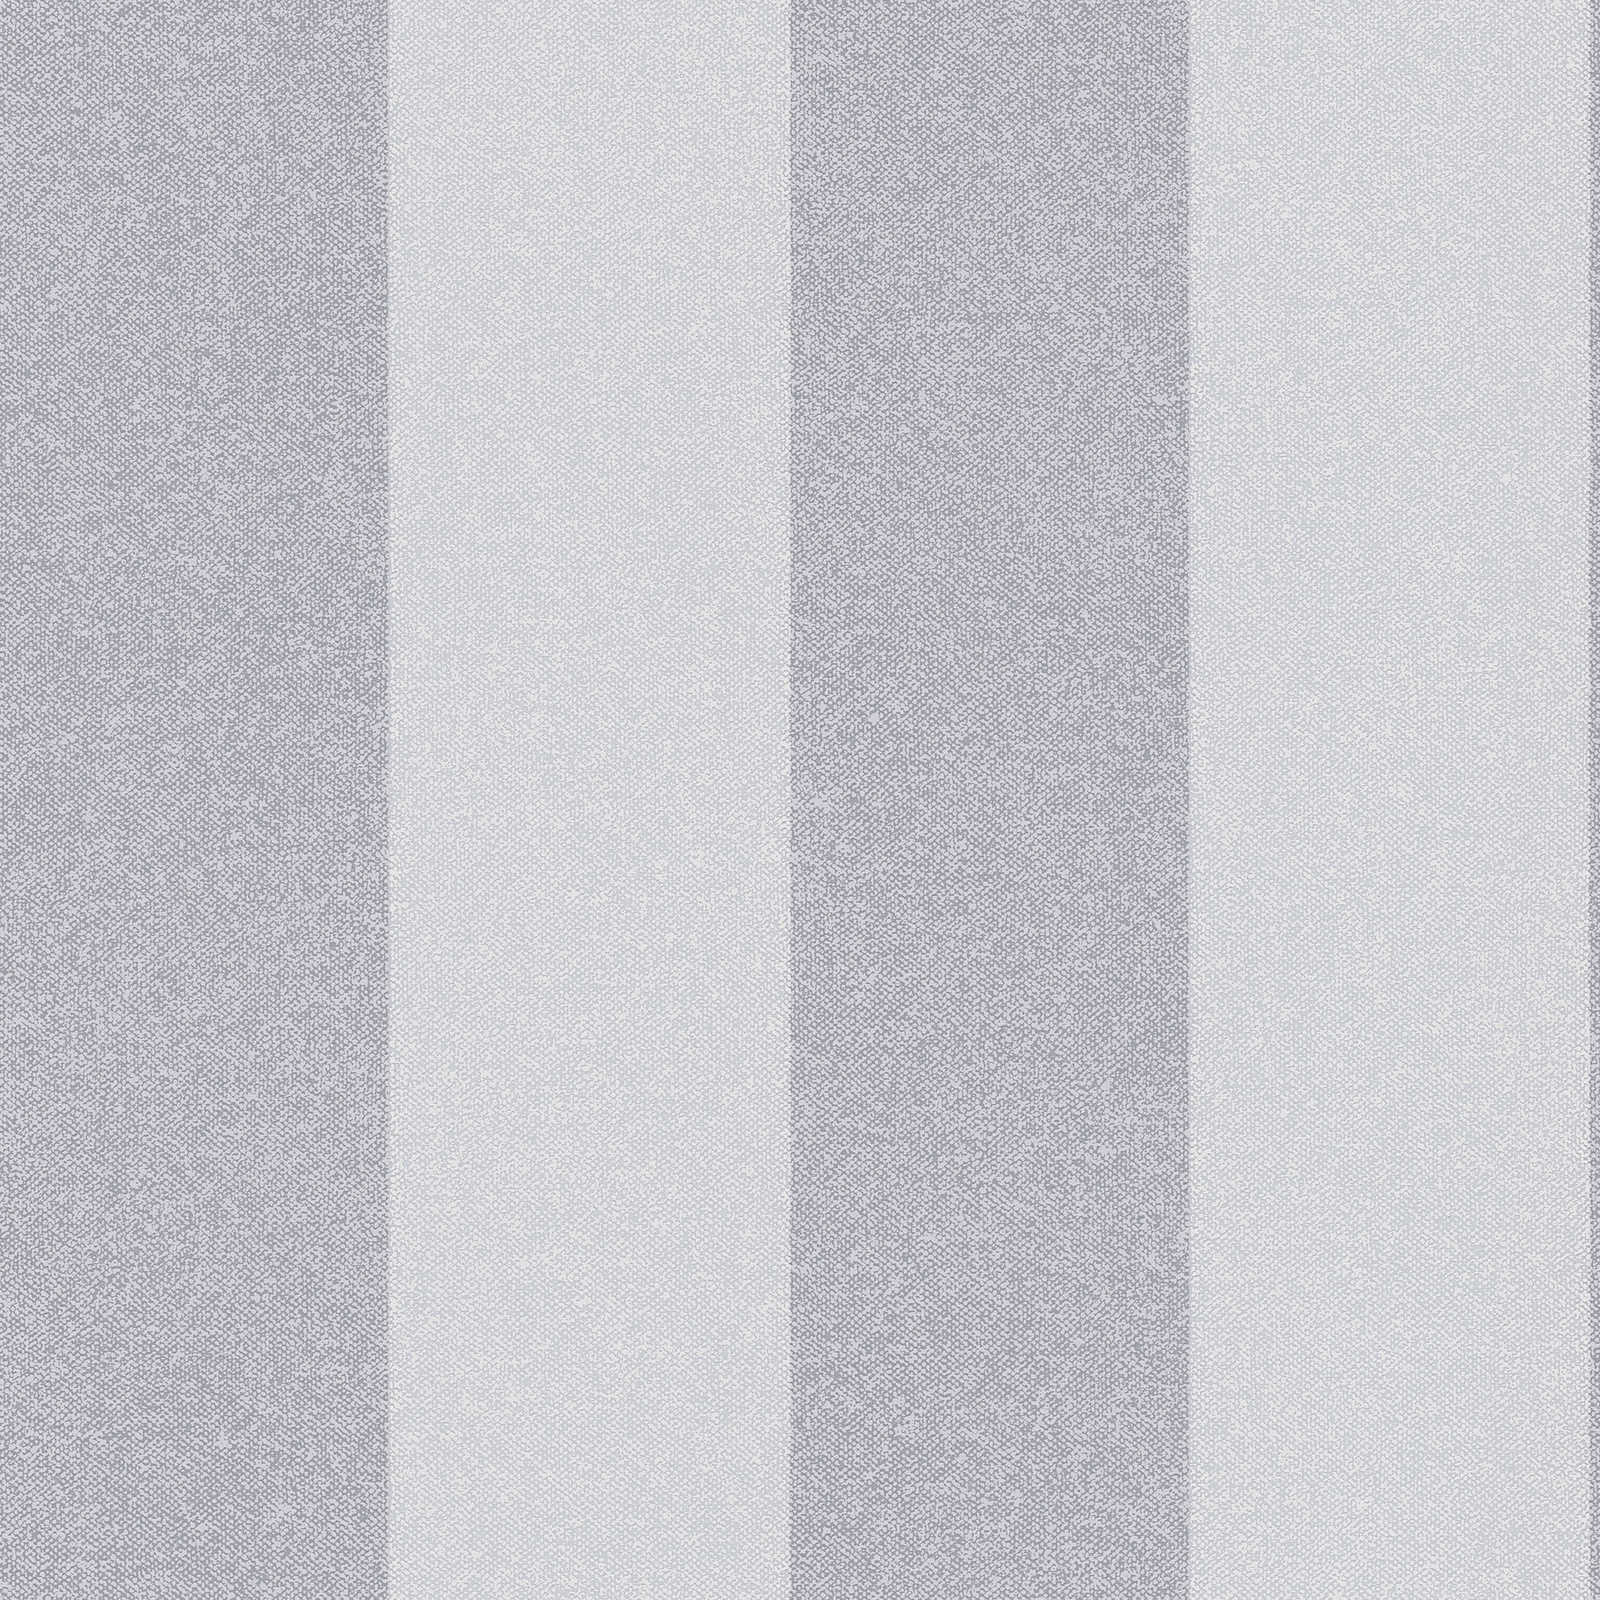 Blockstreifen Tapete mit Leinenoptik – Blau, Grau
